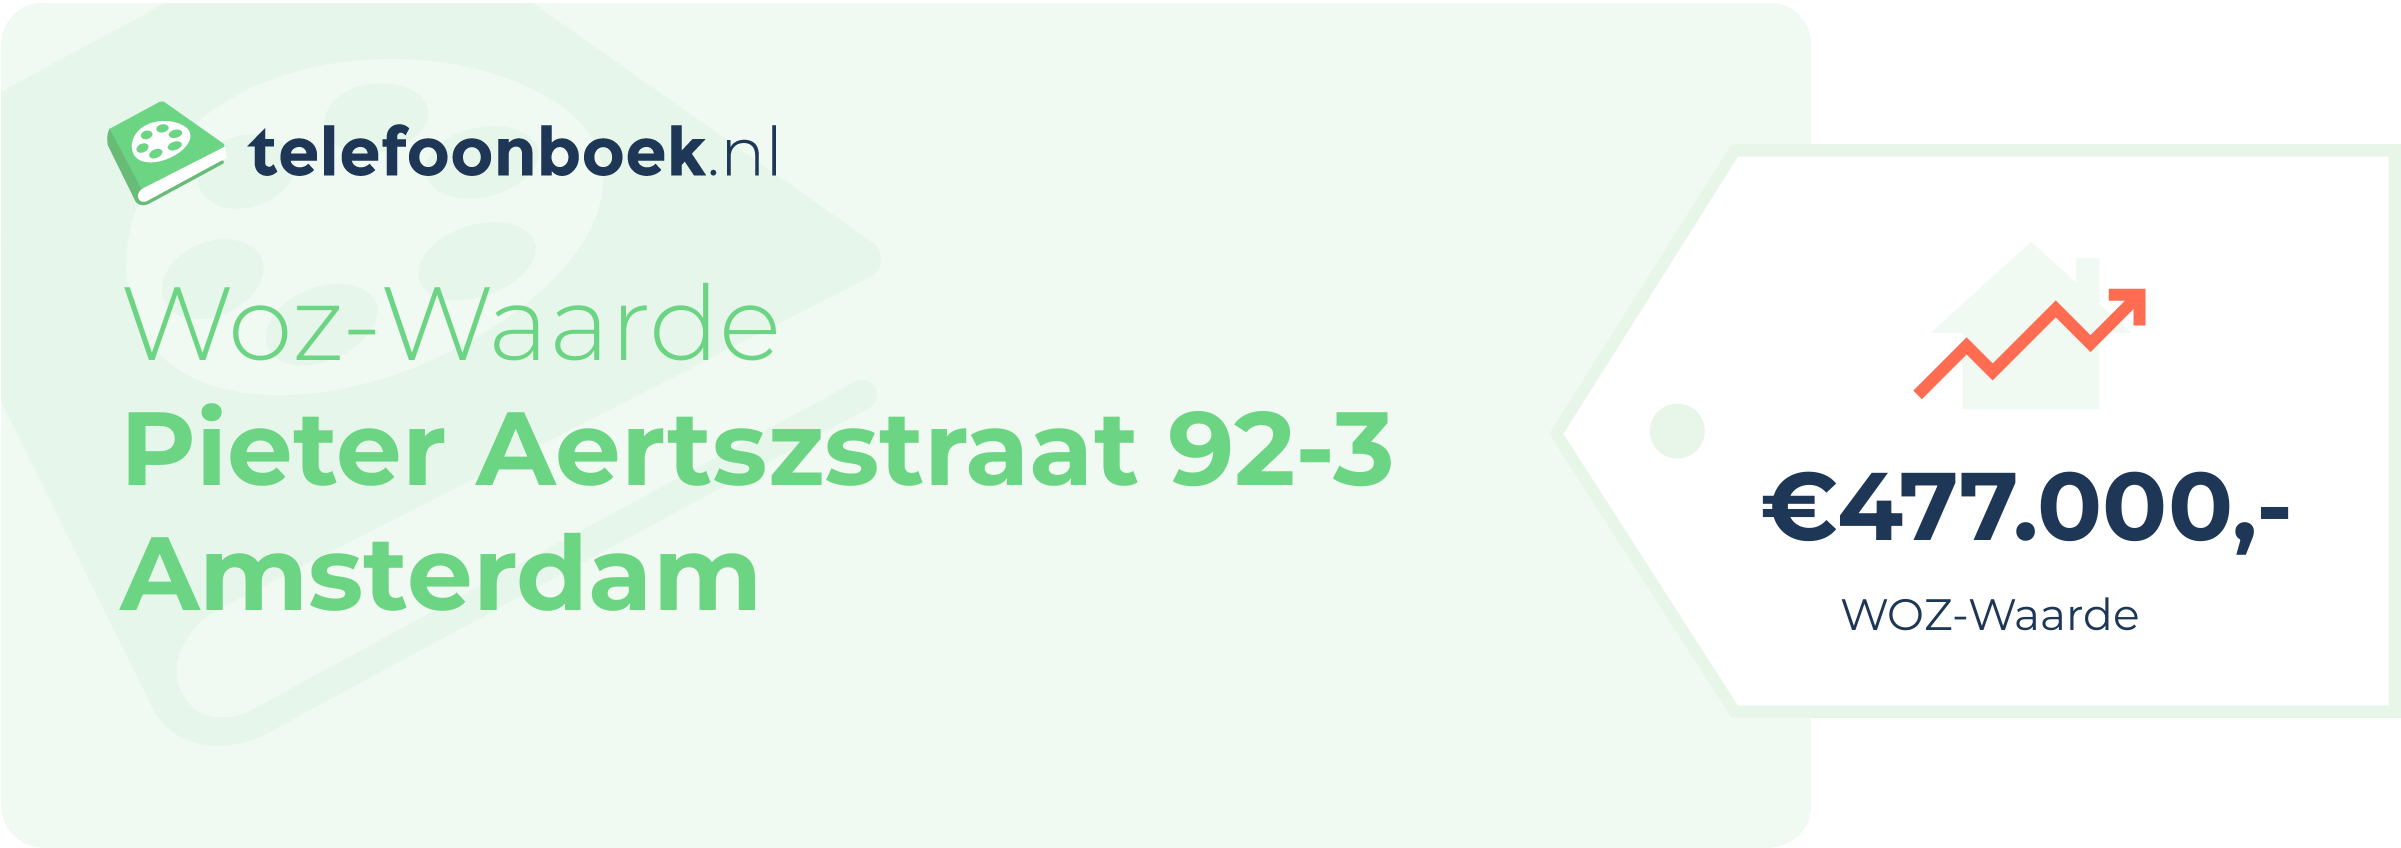 WOZ-waarde Pieter Aertszstraat 92-3 Amsterdam